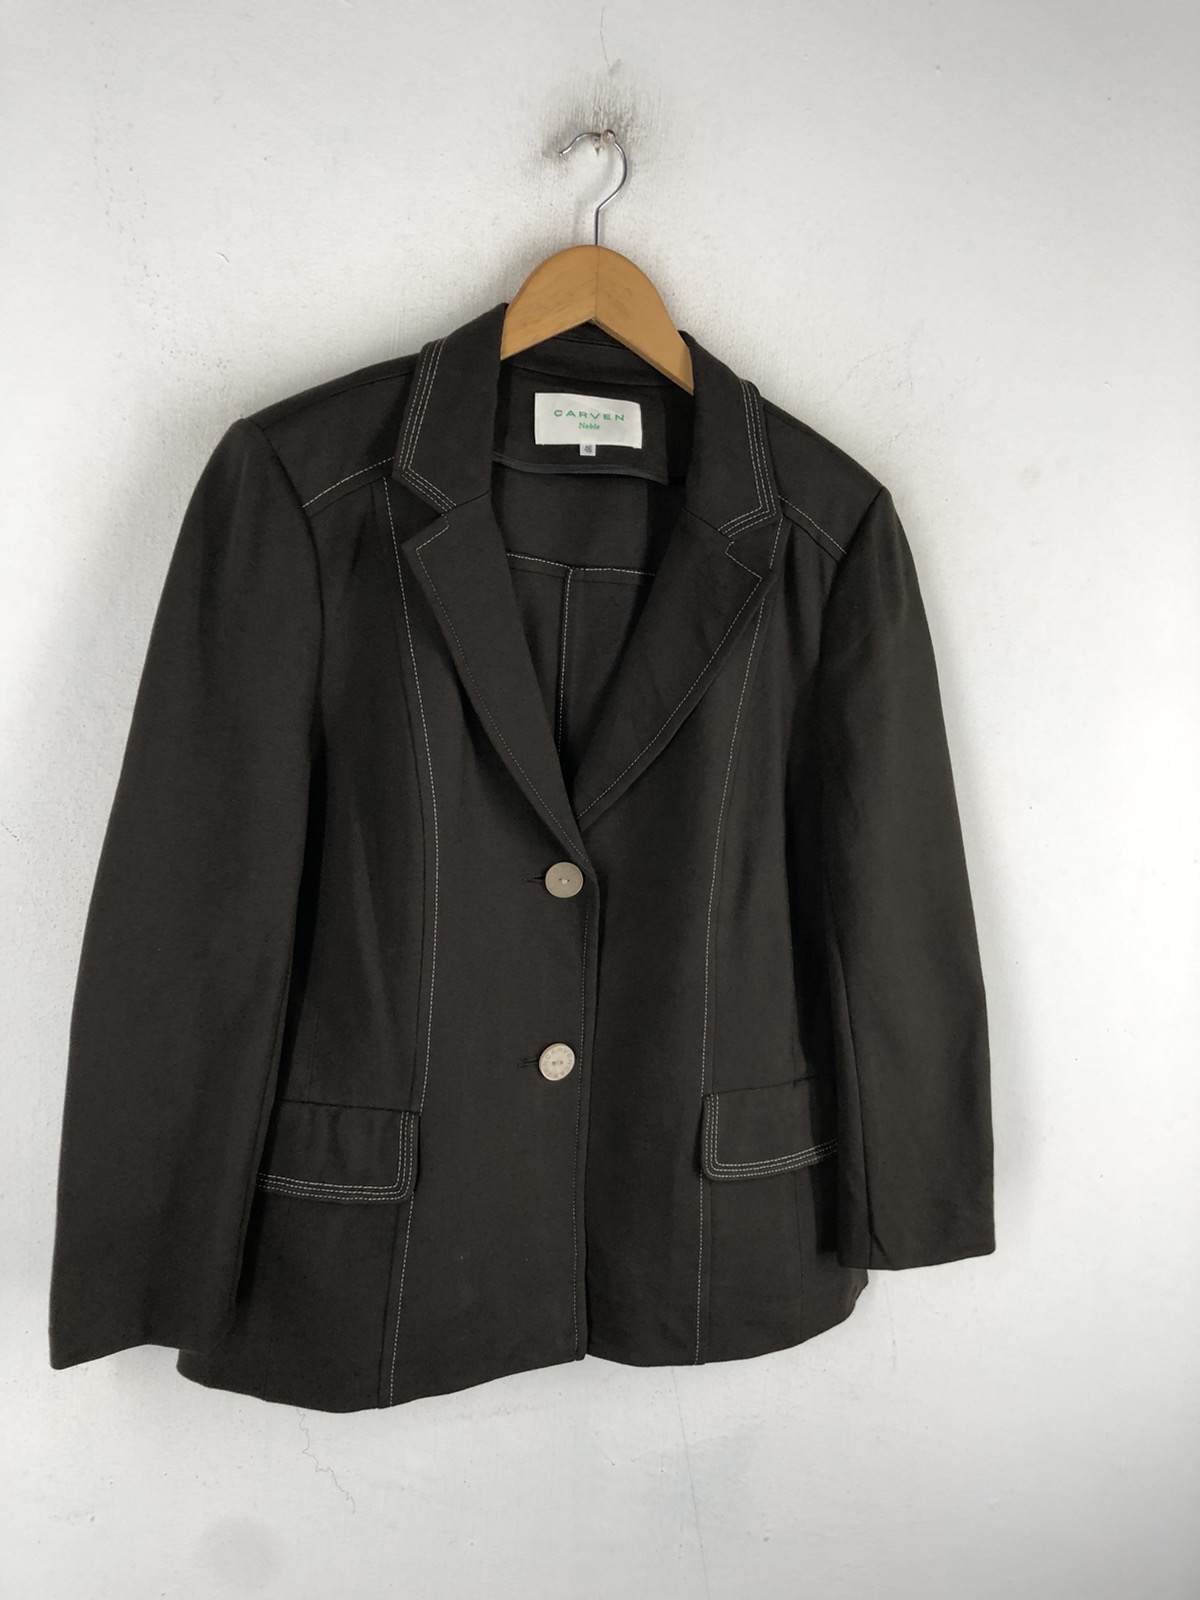 Carven noble jacket - 3